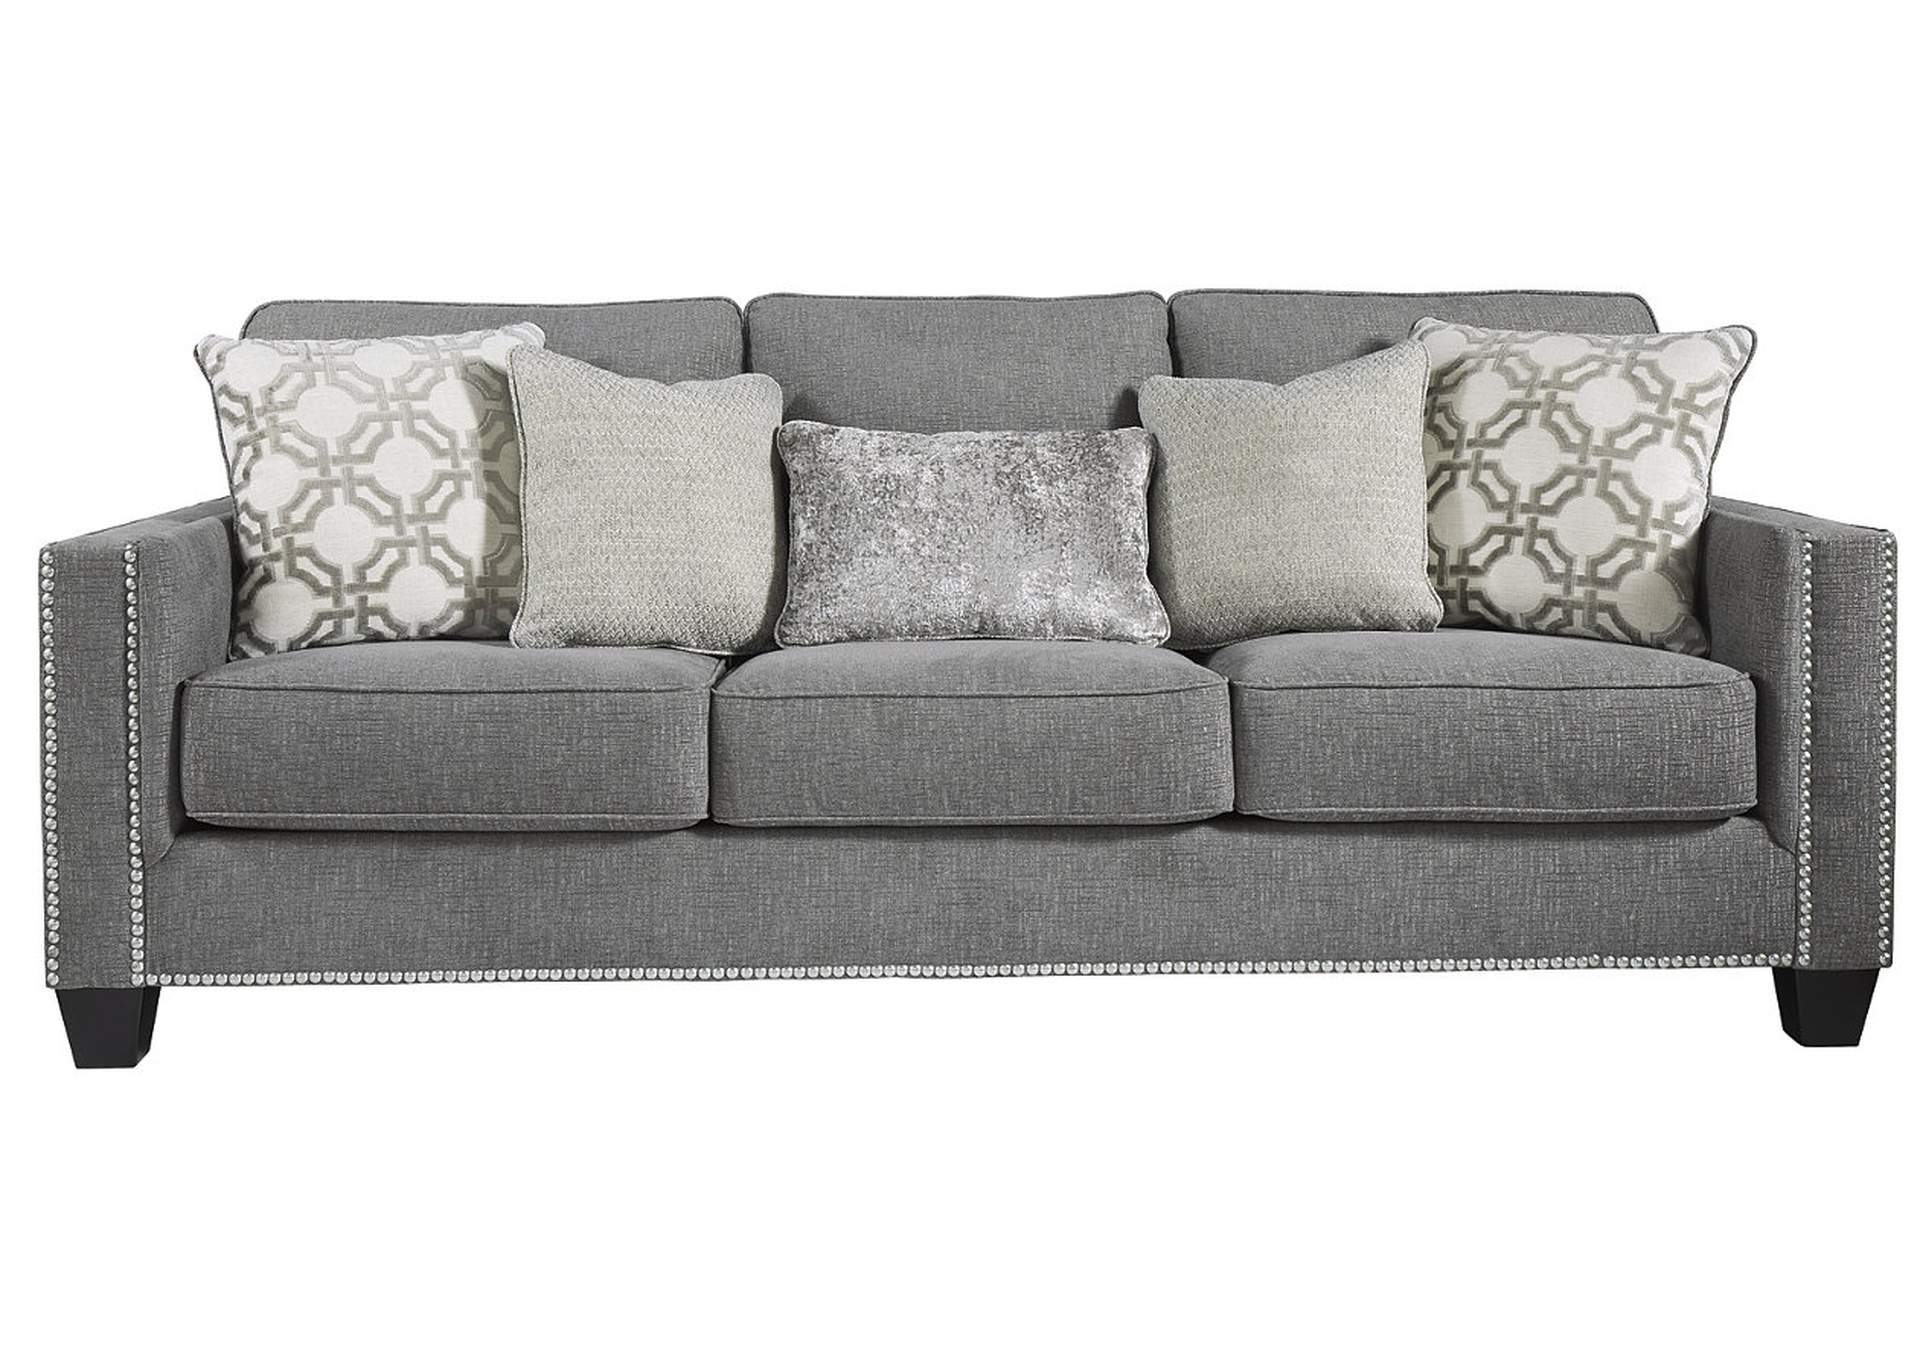 Barrali Sofa Ashley Furniture Homestore Independently